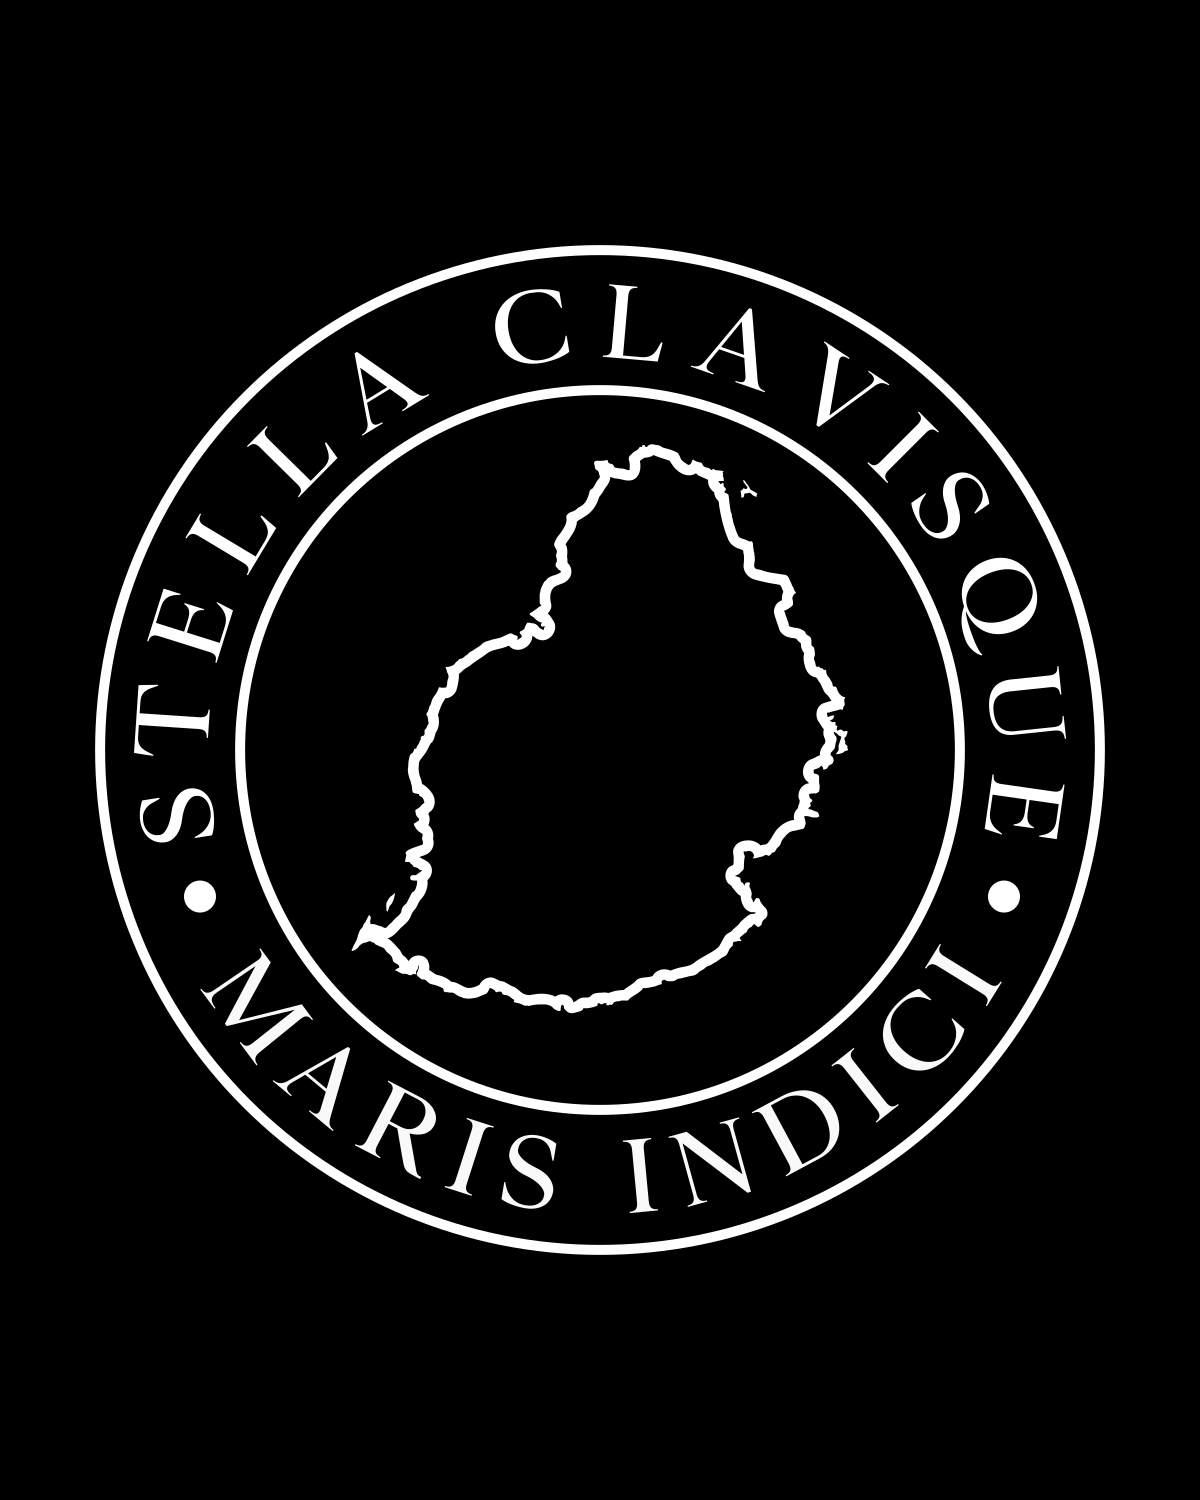 Stella clavisque maris indici by Kotomili